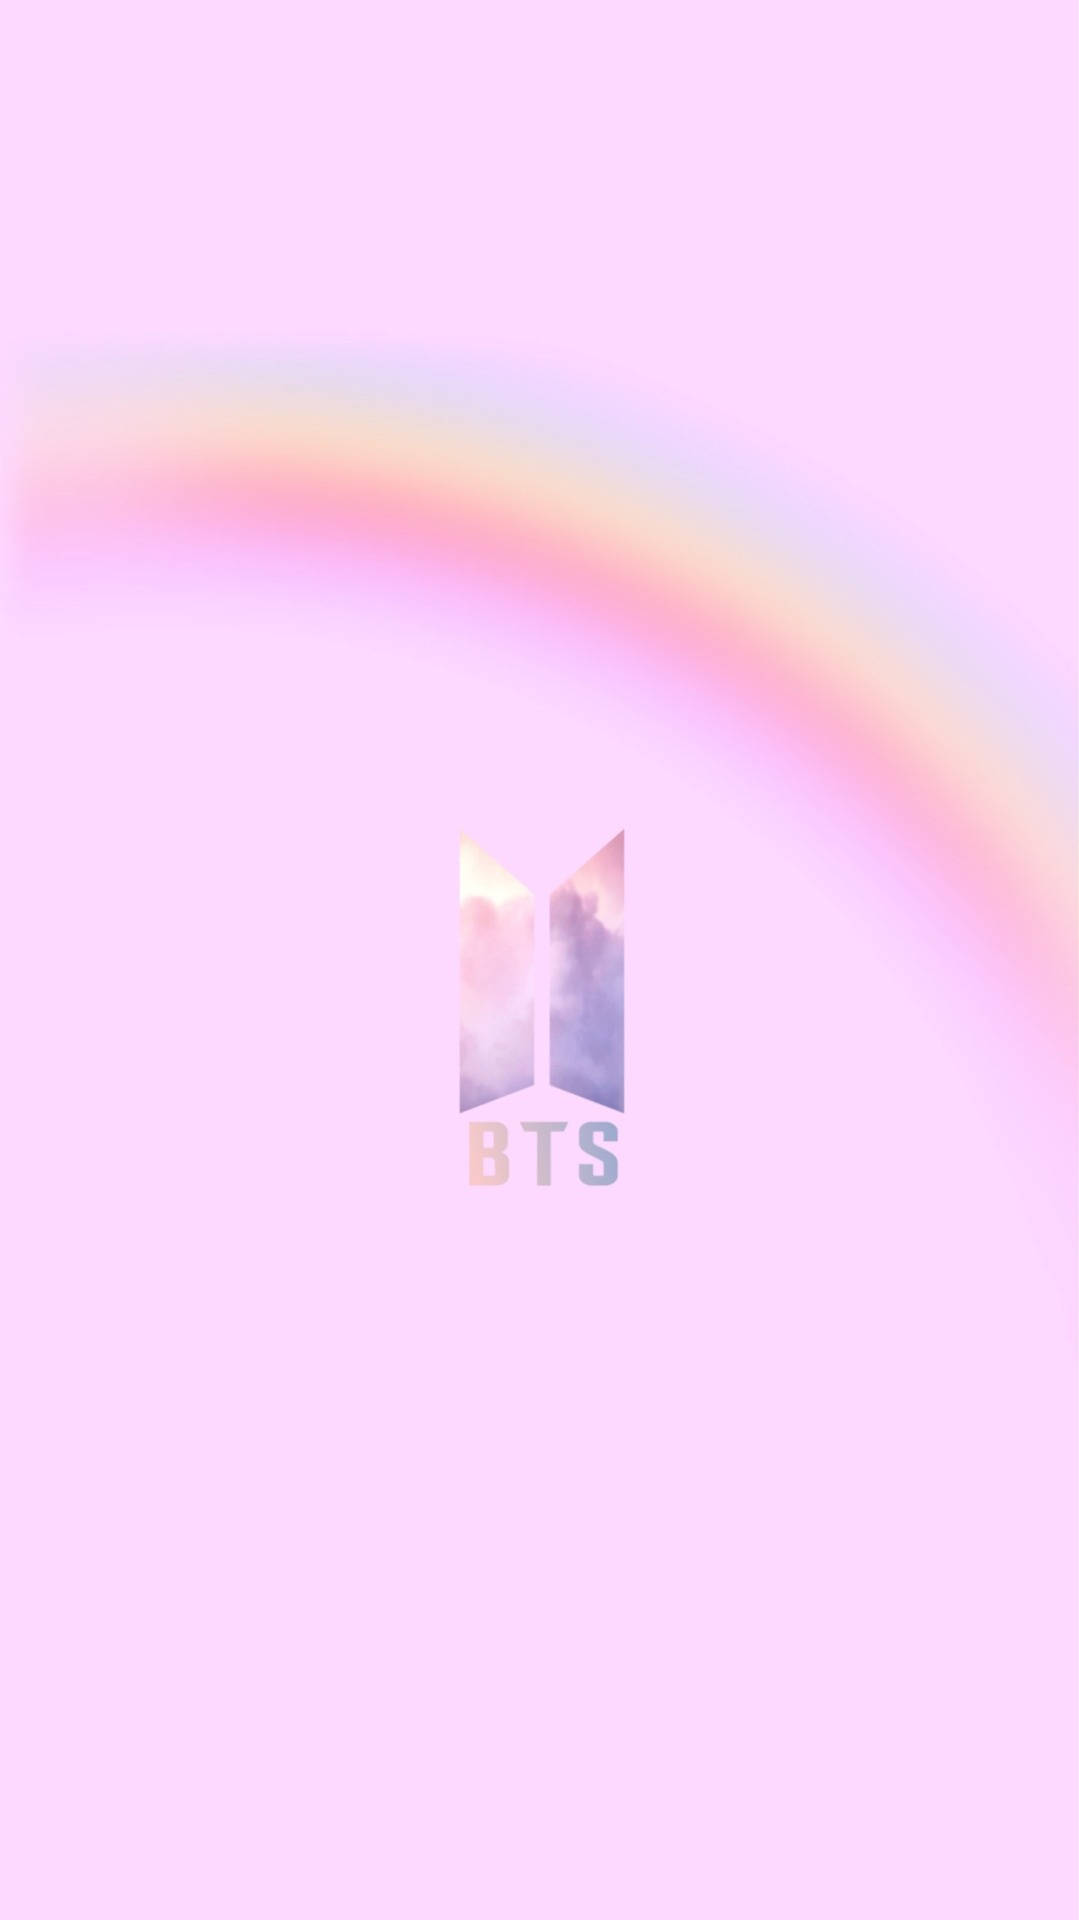 Bts Logo Pink Rainbow Picture